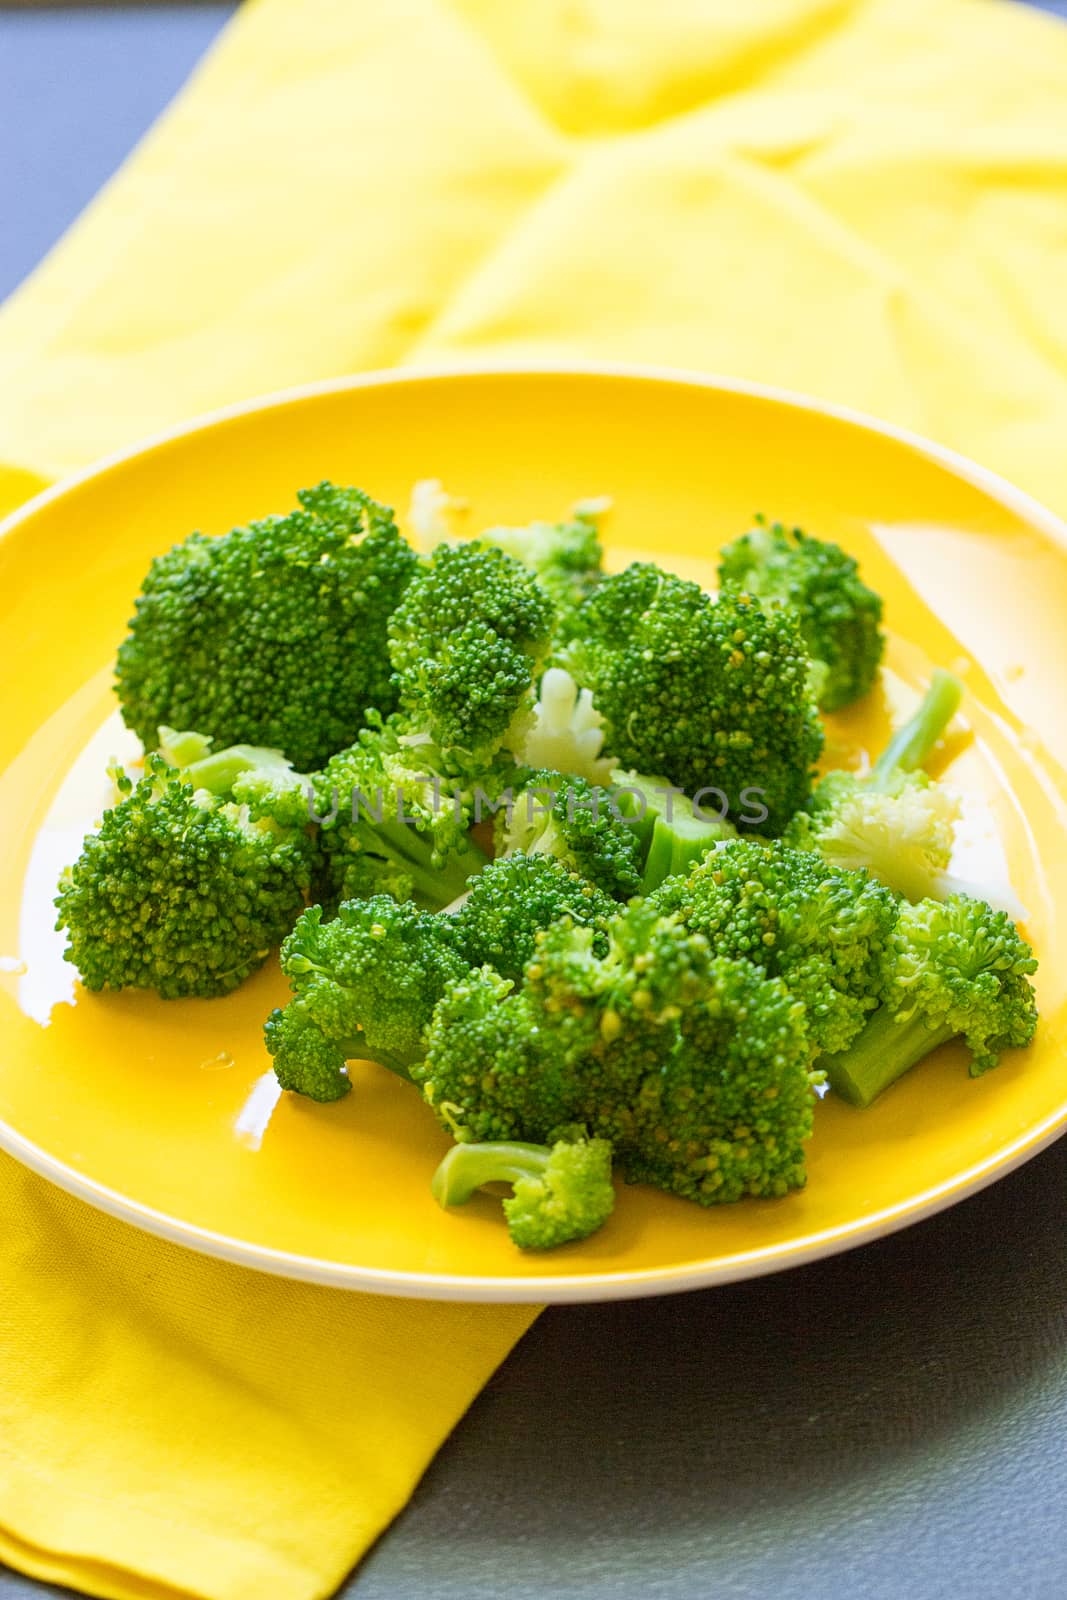 Fresh broccoli cut in yellow plate by victosha